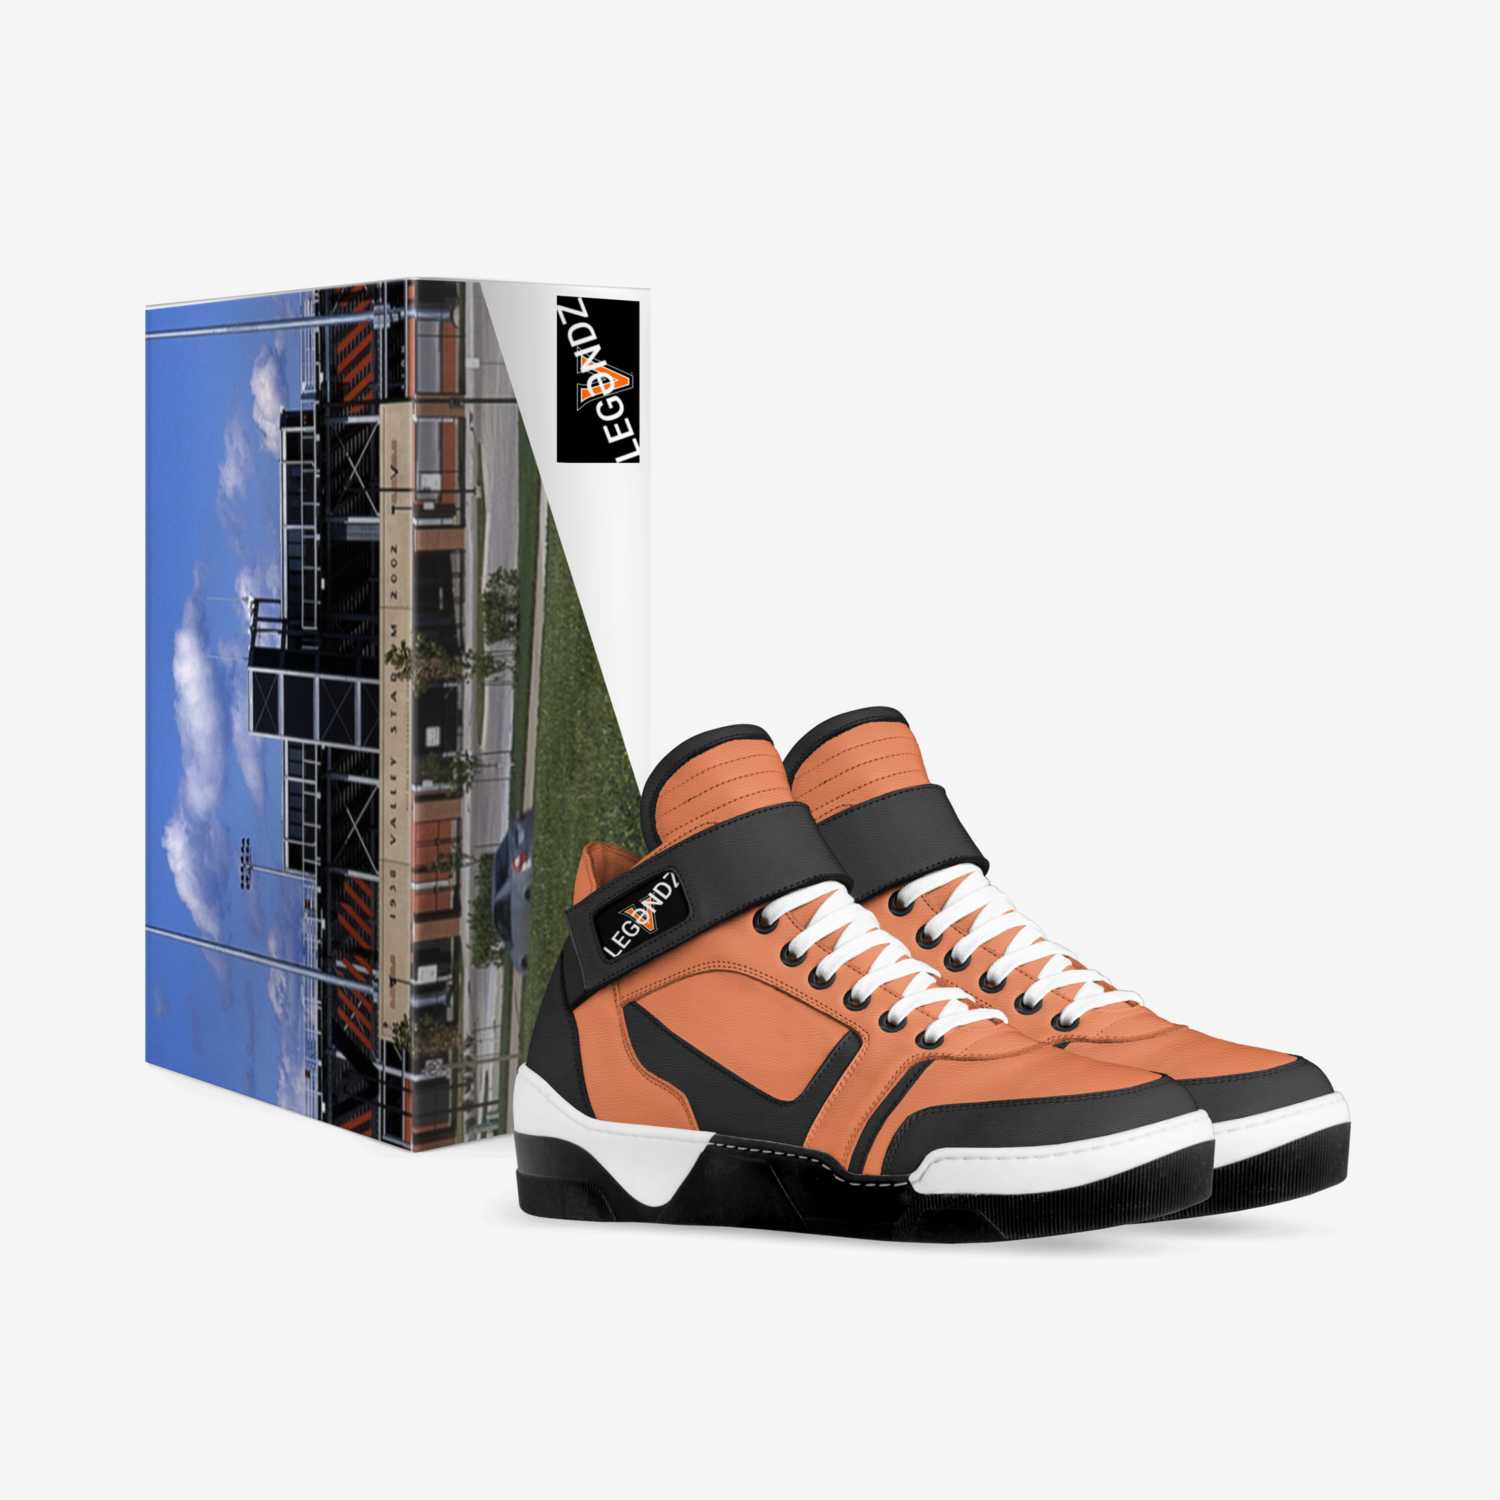 WDM VALLƏY custom made in Italy shoes by Juju & Najm Toomey | Box view